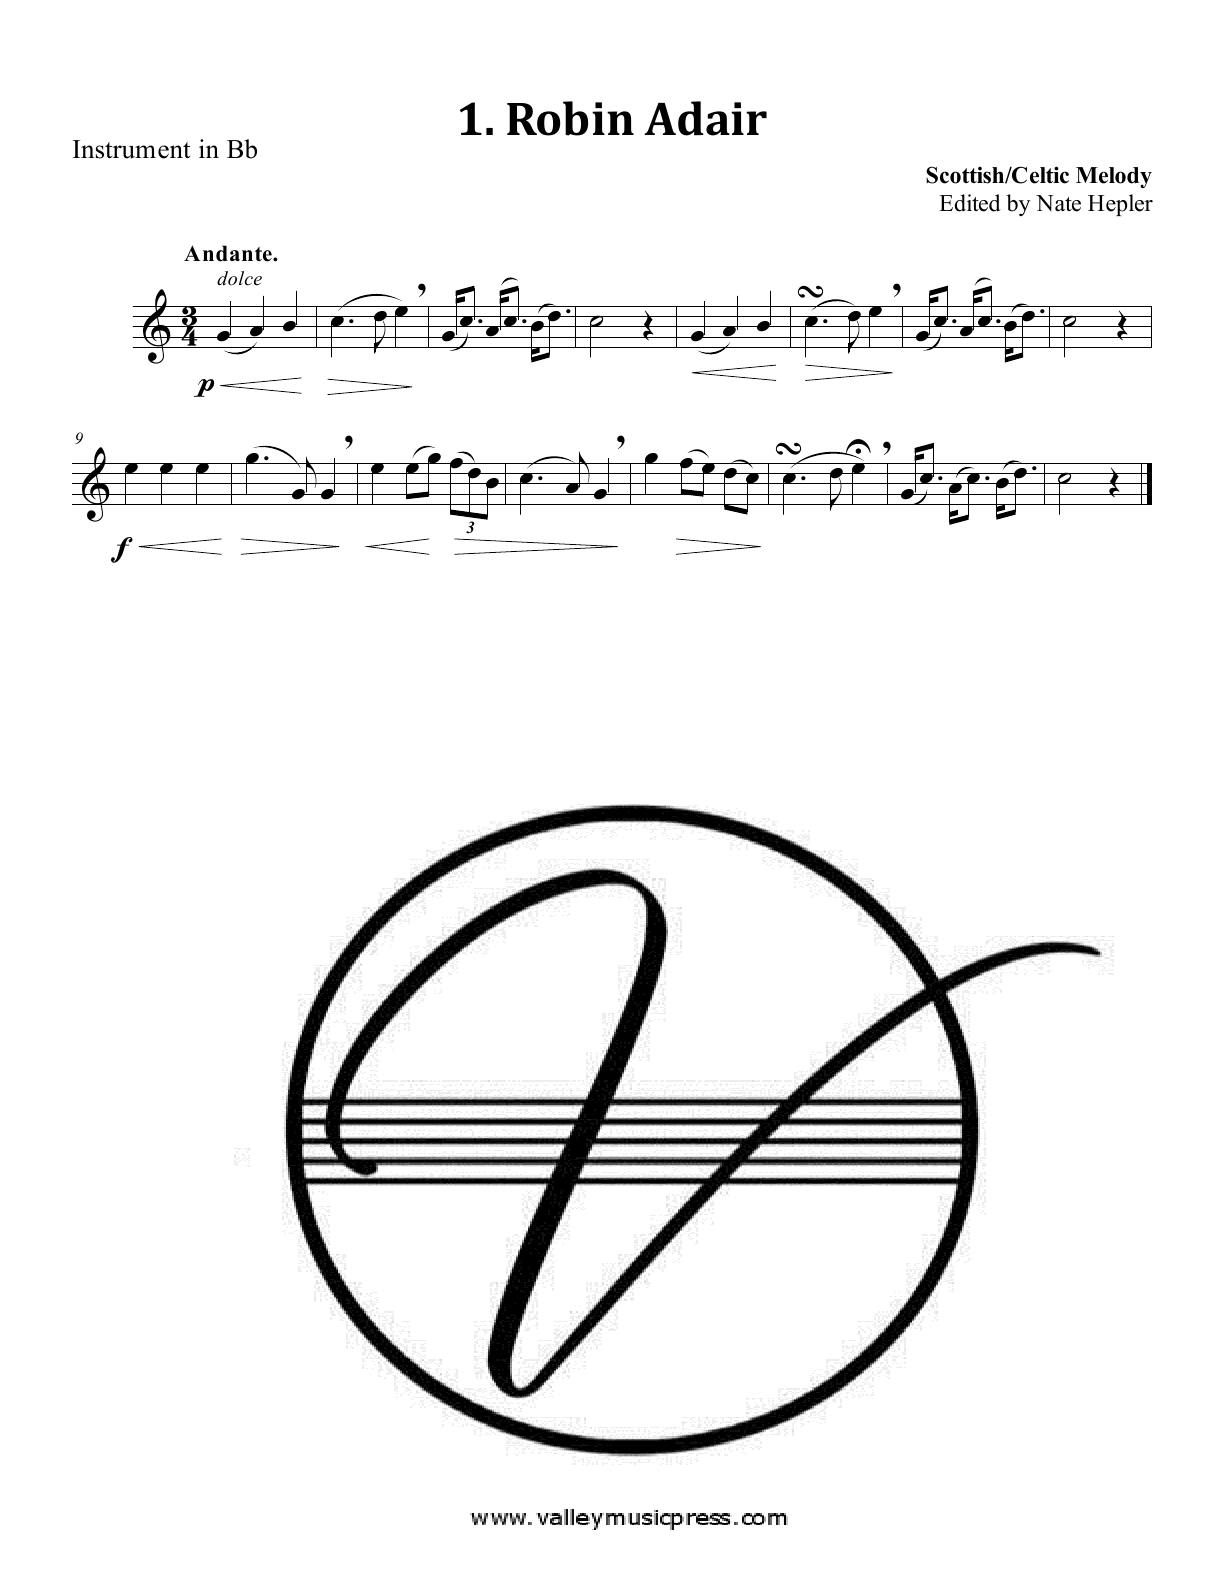 Arban Art of Phrasing Piano Accompaniment Vol. 2 No. 26-50 (Trp)